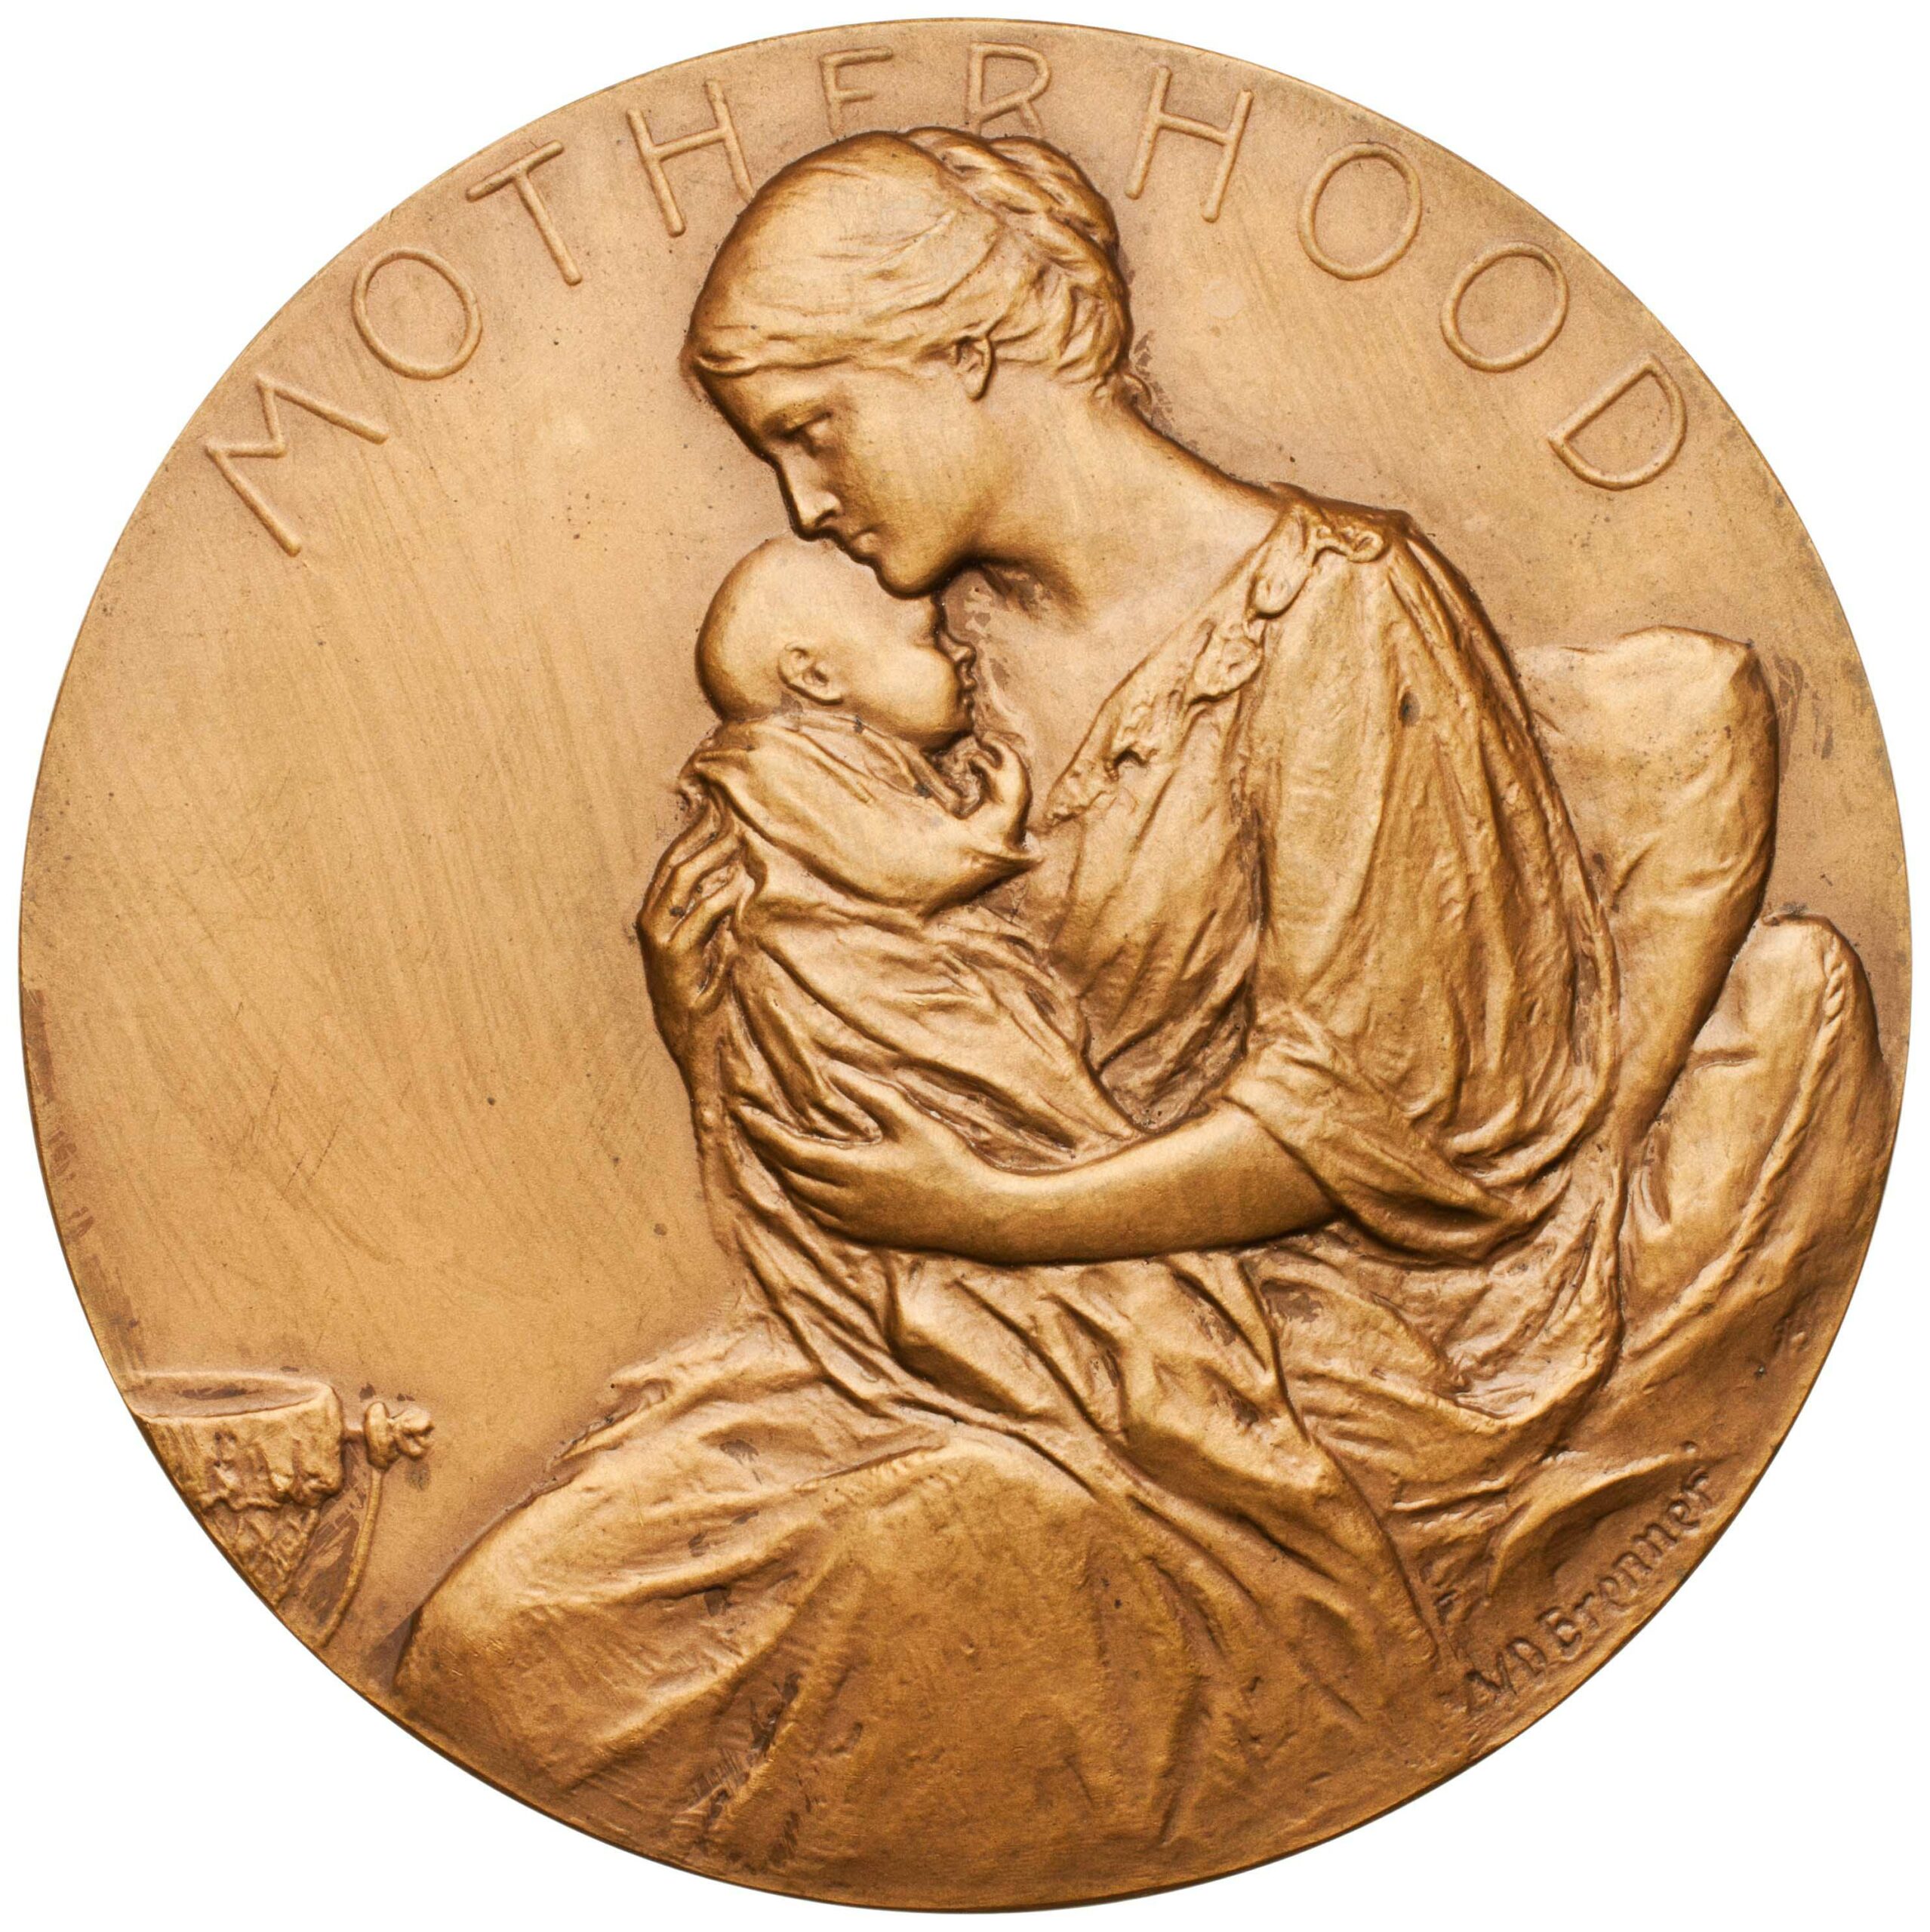 Hahlo-115-116, Motherhood medal